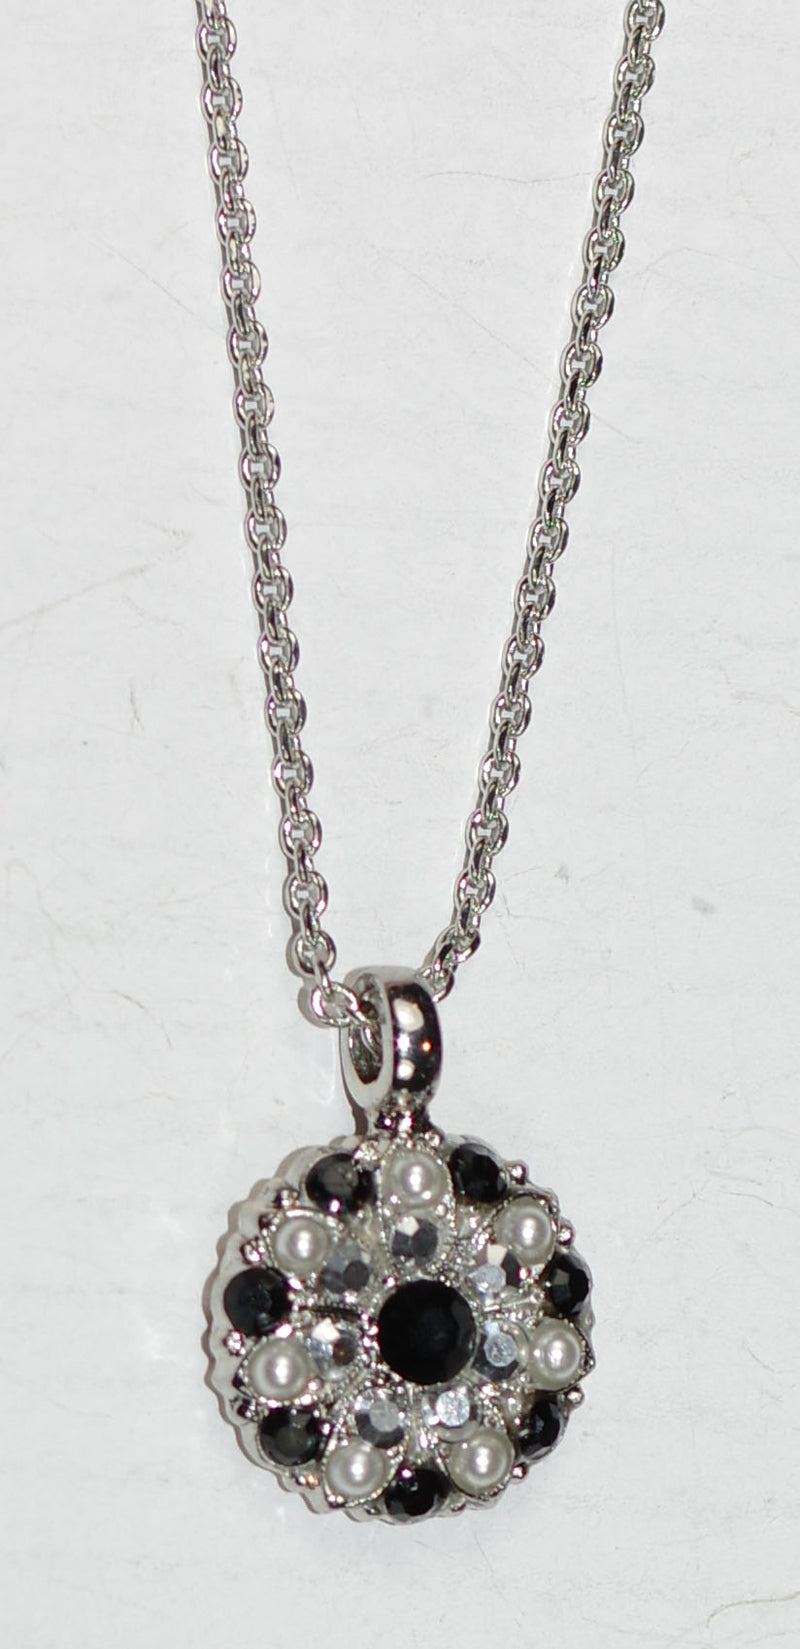 MARIANA ANGEL PENDANT ROCKY ROAD:  black, pearl, a/b stones in silver rhodium setting, 18" adjustable chain